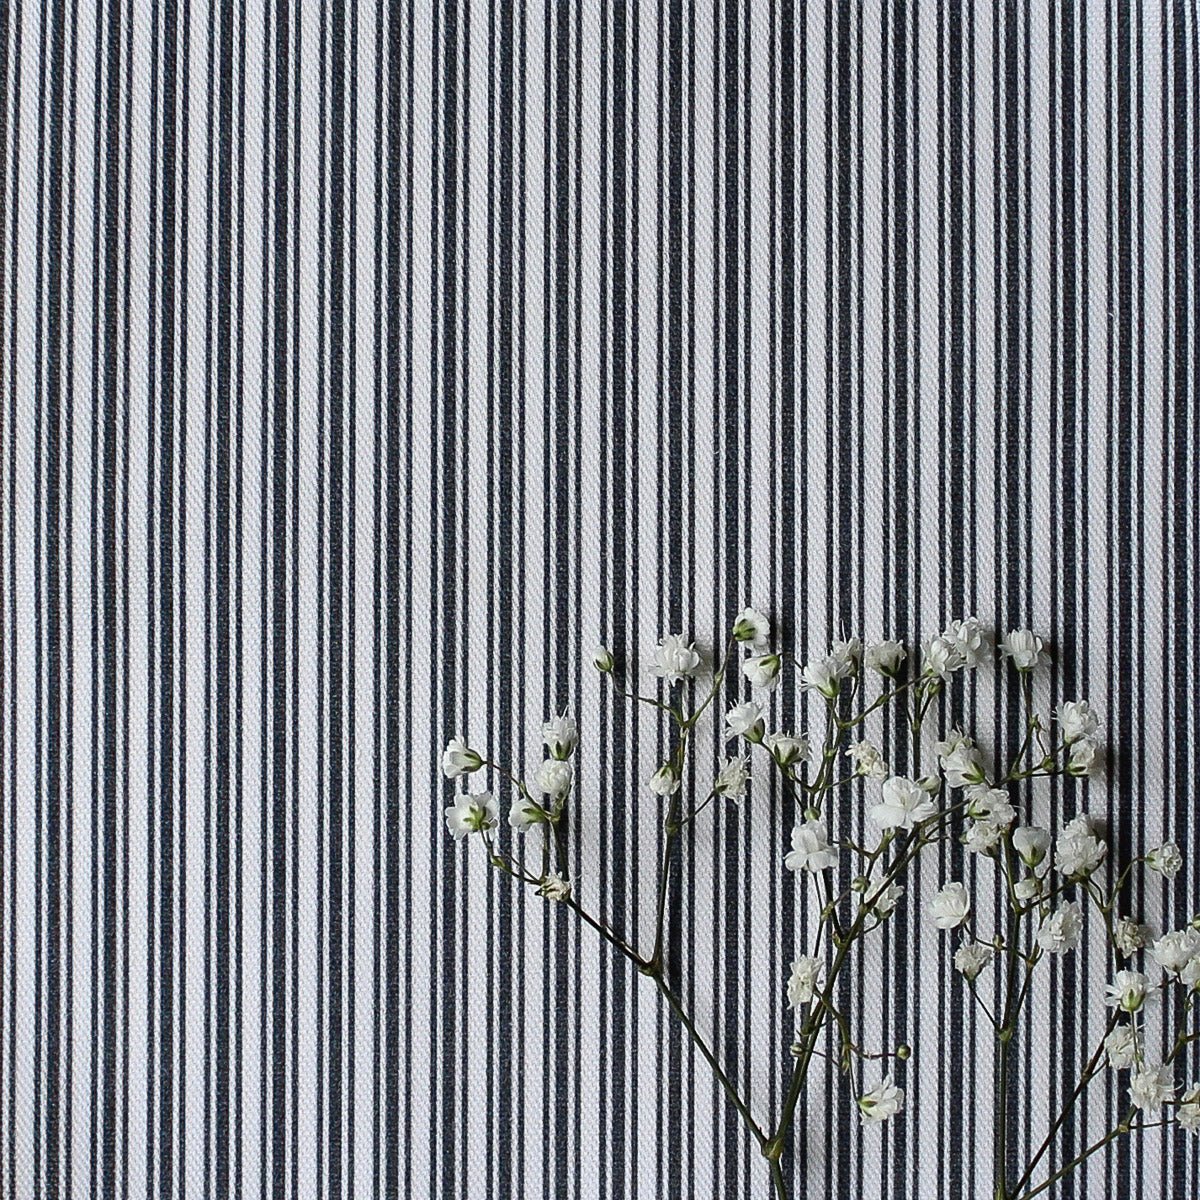 Ticking Stripe Fabric - Graphite - Hydrangea Lane Home